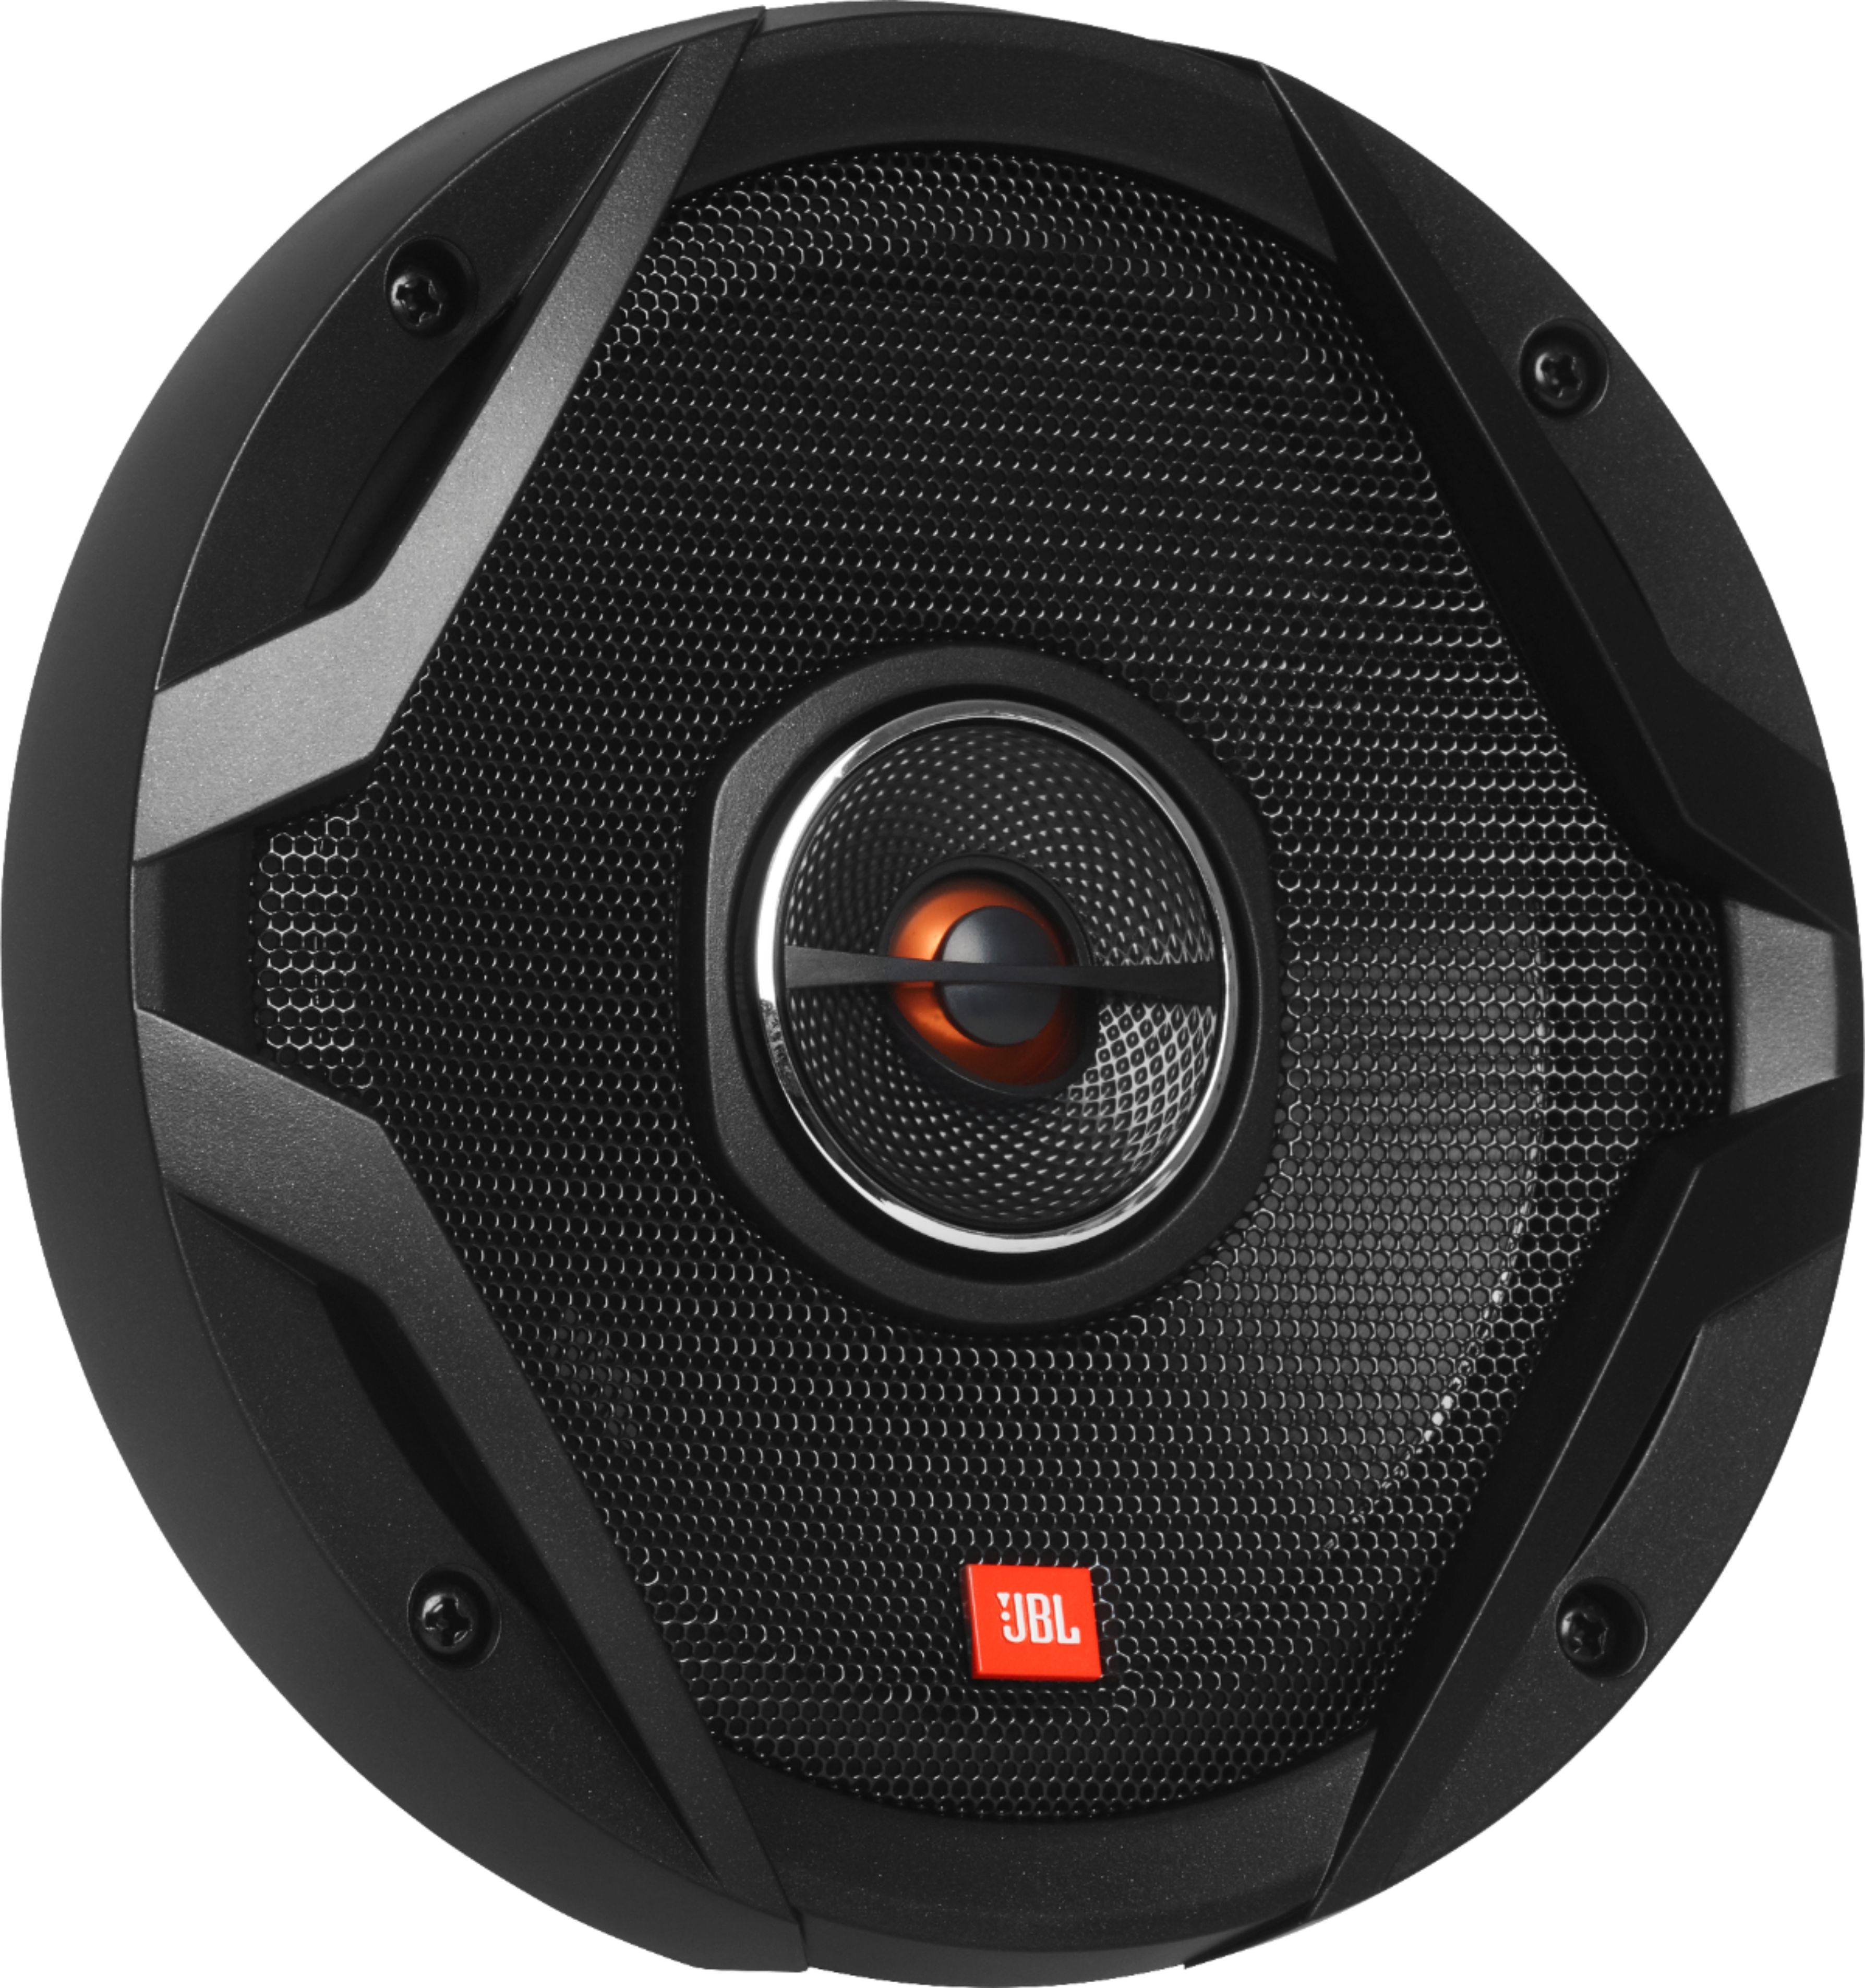 Angle View: KICKER - CS Series 6" x 9" 2-Way Car Speakers with Polypropylene Cones (Pair) - Black